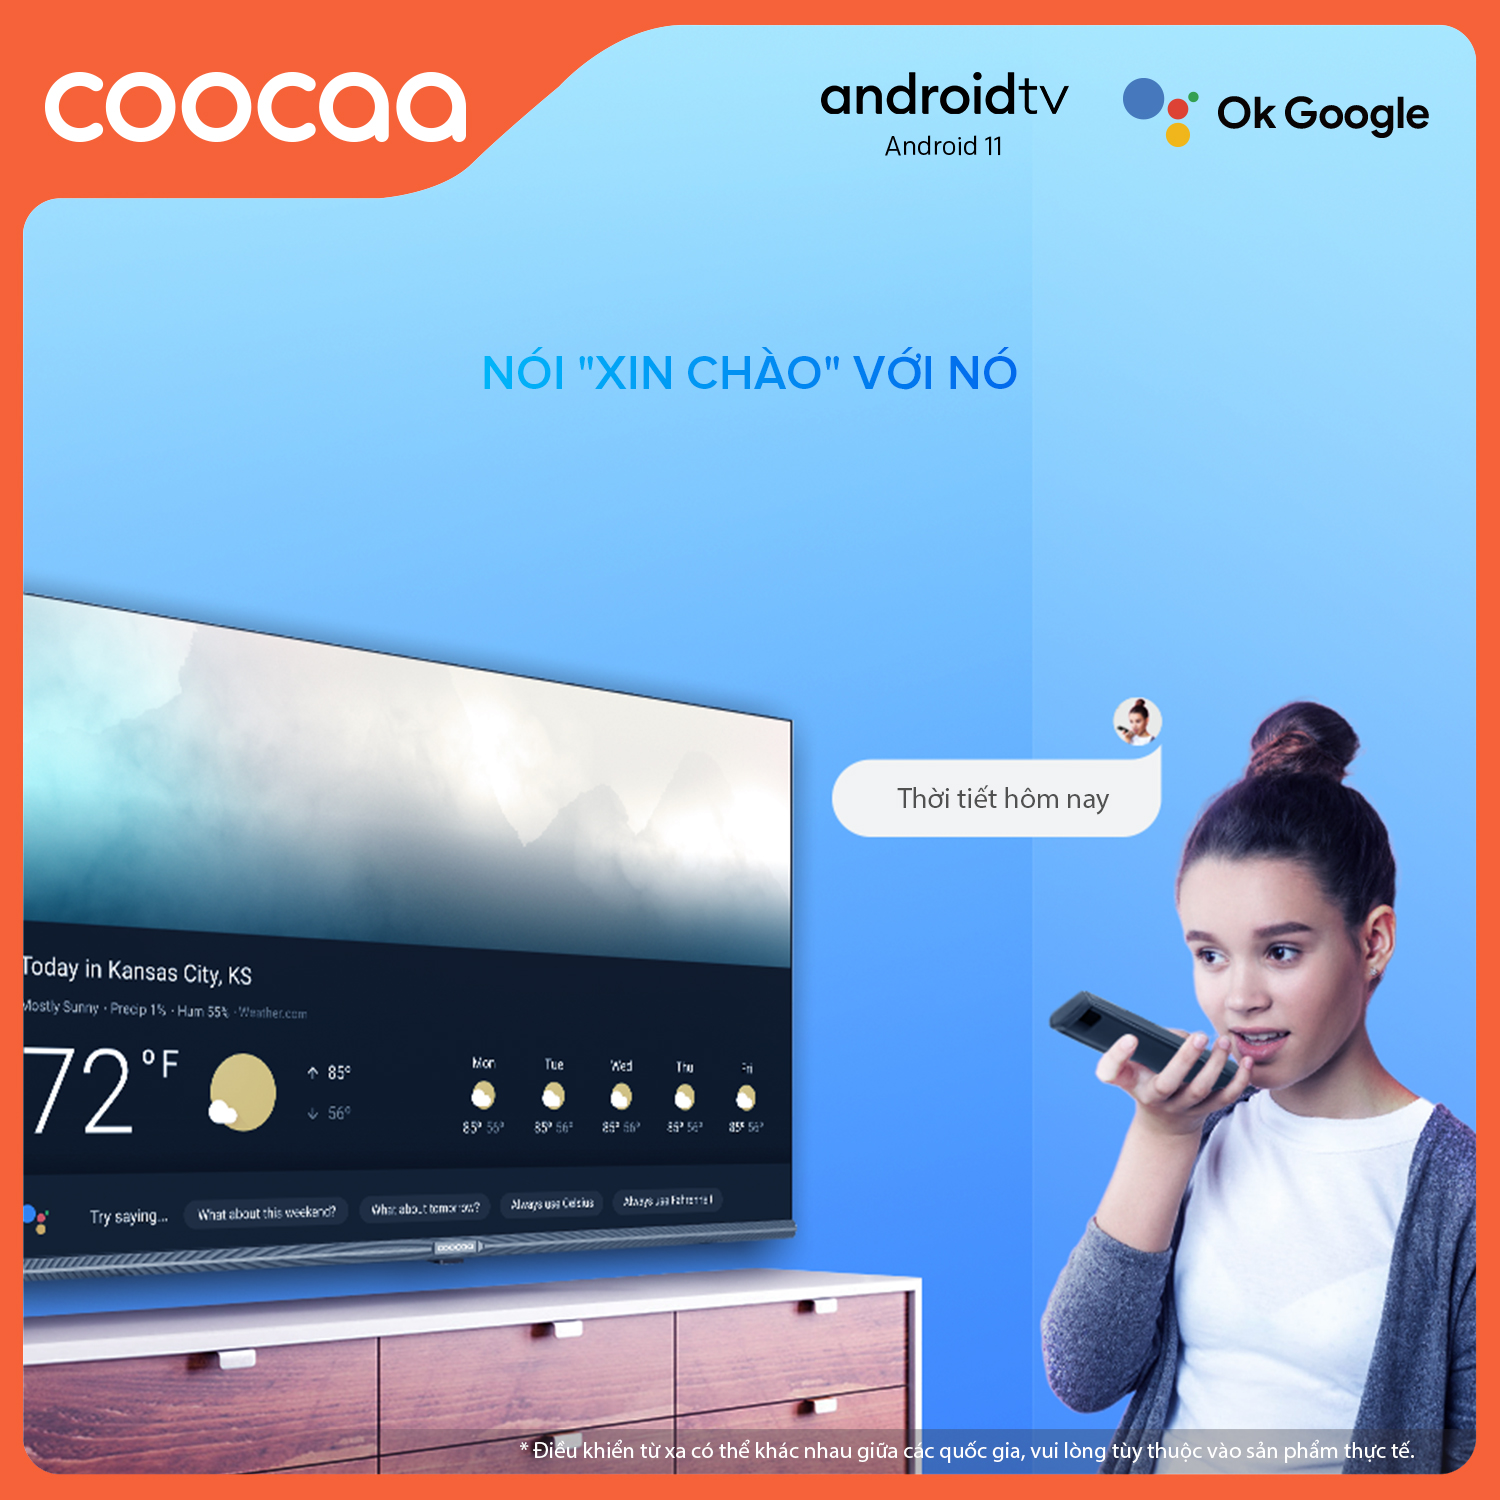 Android SMART TV Coocaa 32 inch - Model 32S7G Android 11.0 (Model 2020) - Hàng chính hãng